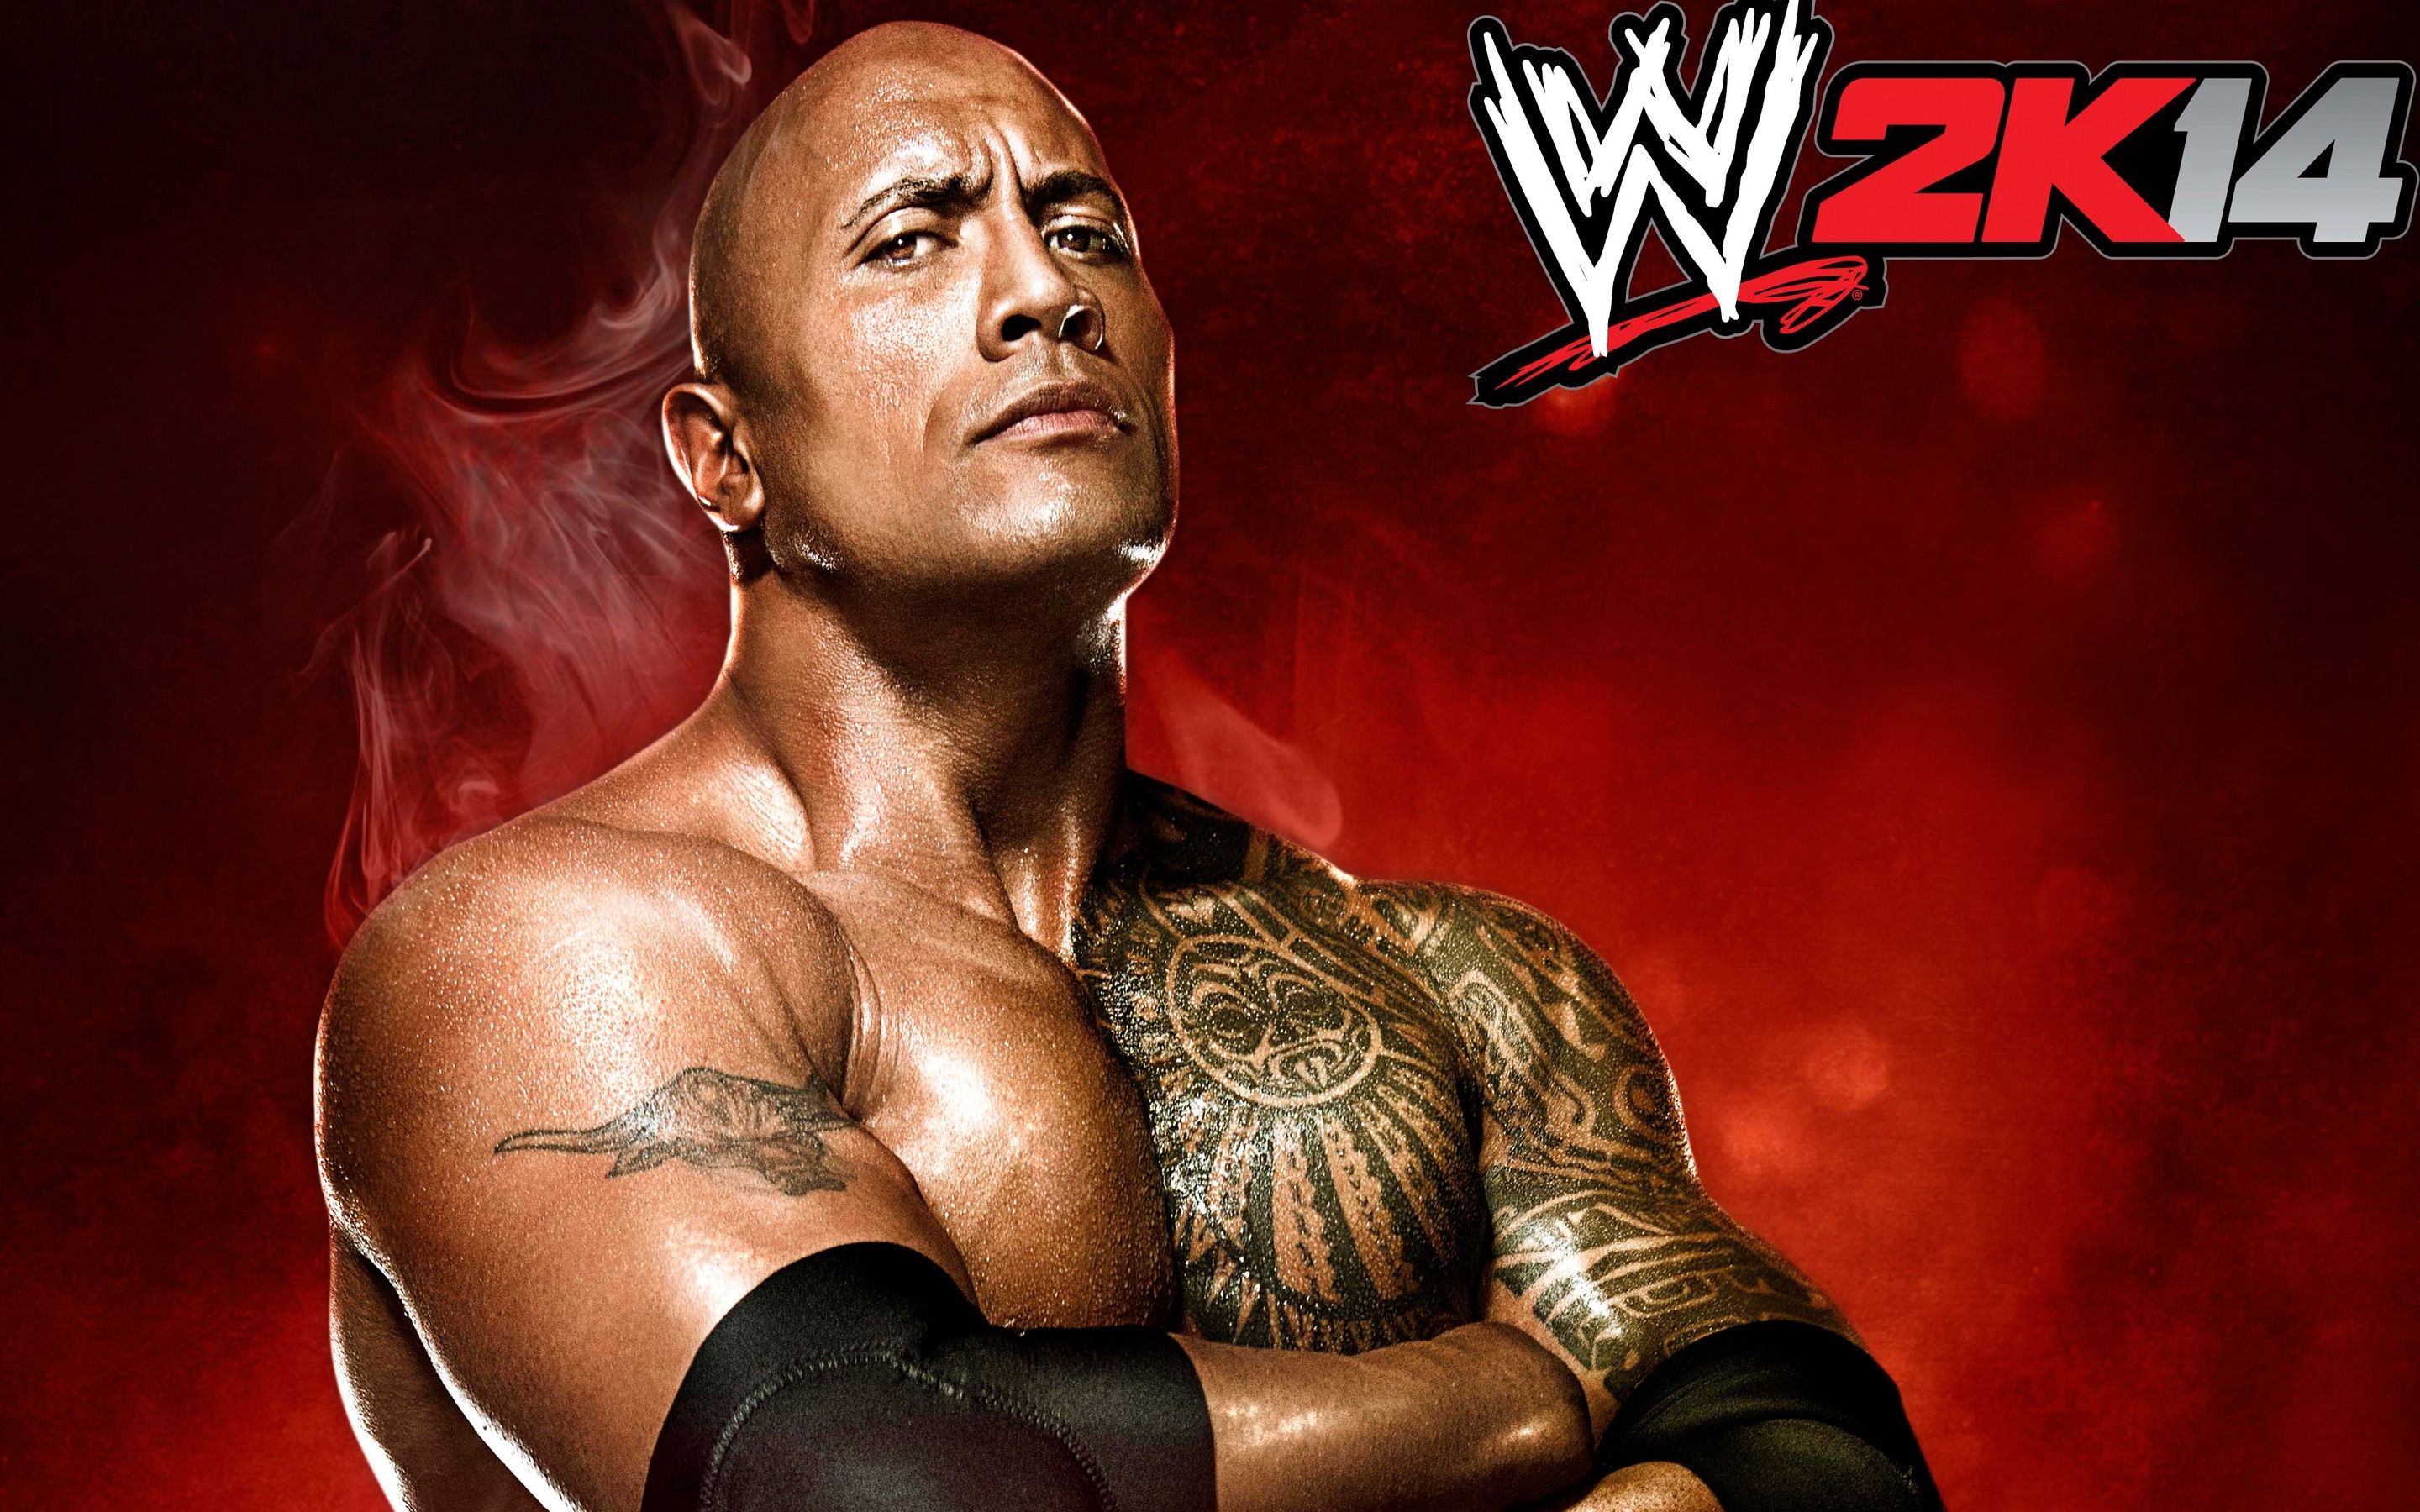 WWE 2K14 Game Wallpaper in jpg format for free download